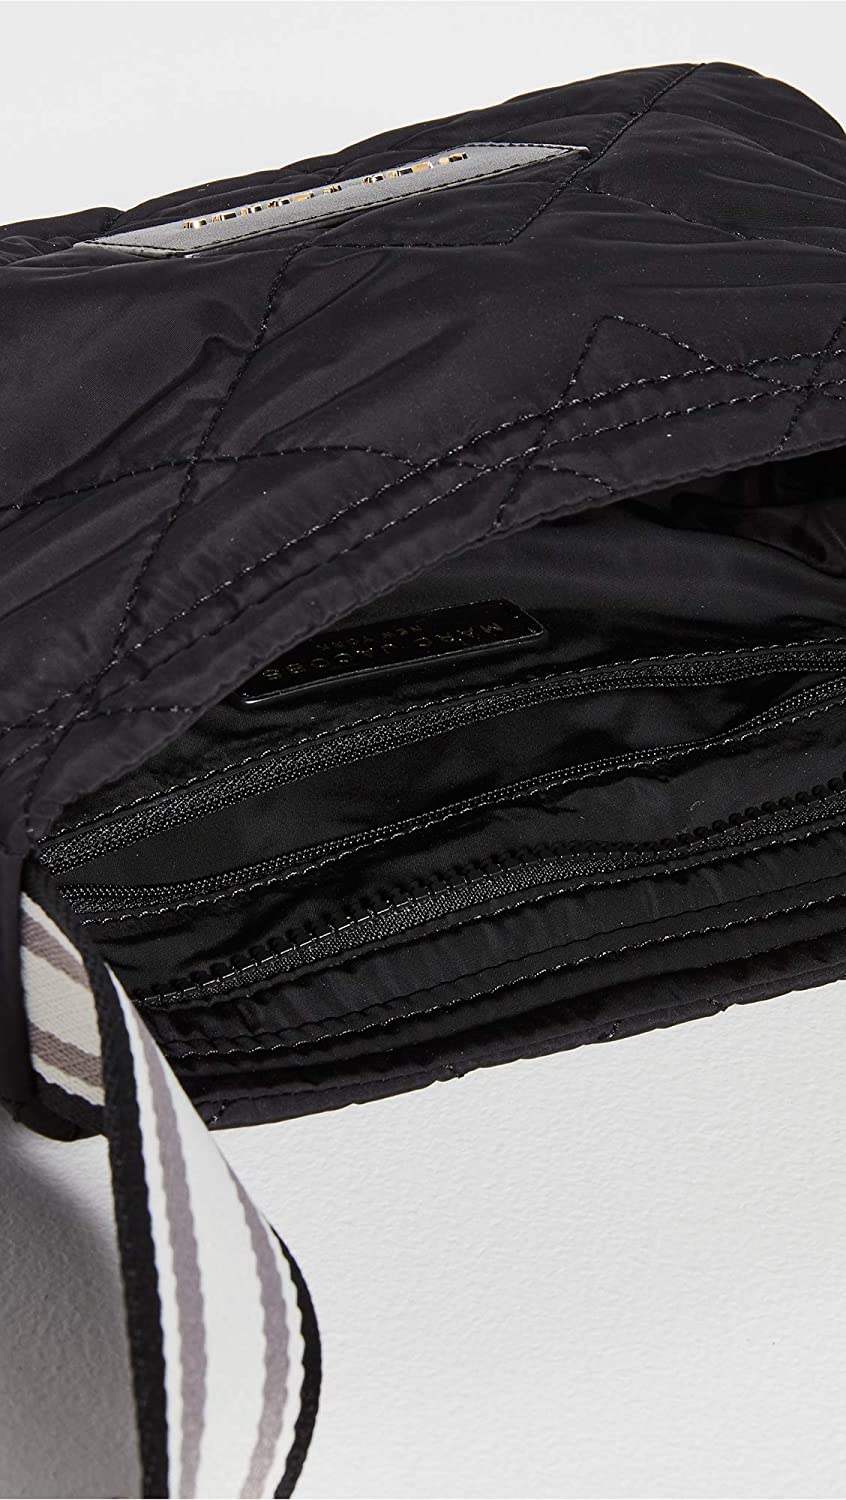 Marc Jacobs Women's Messenger Bag, Black, One Size